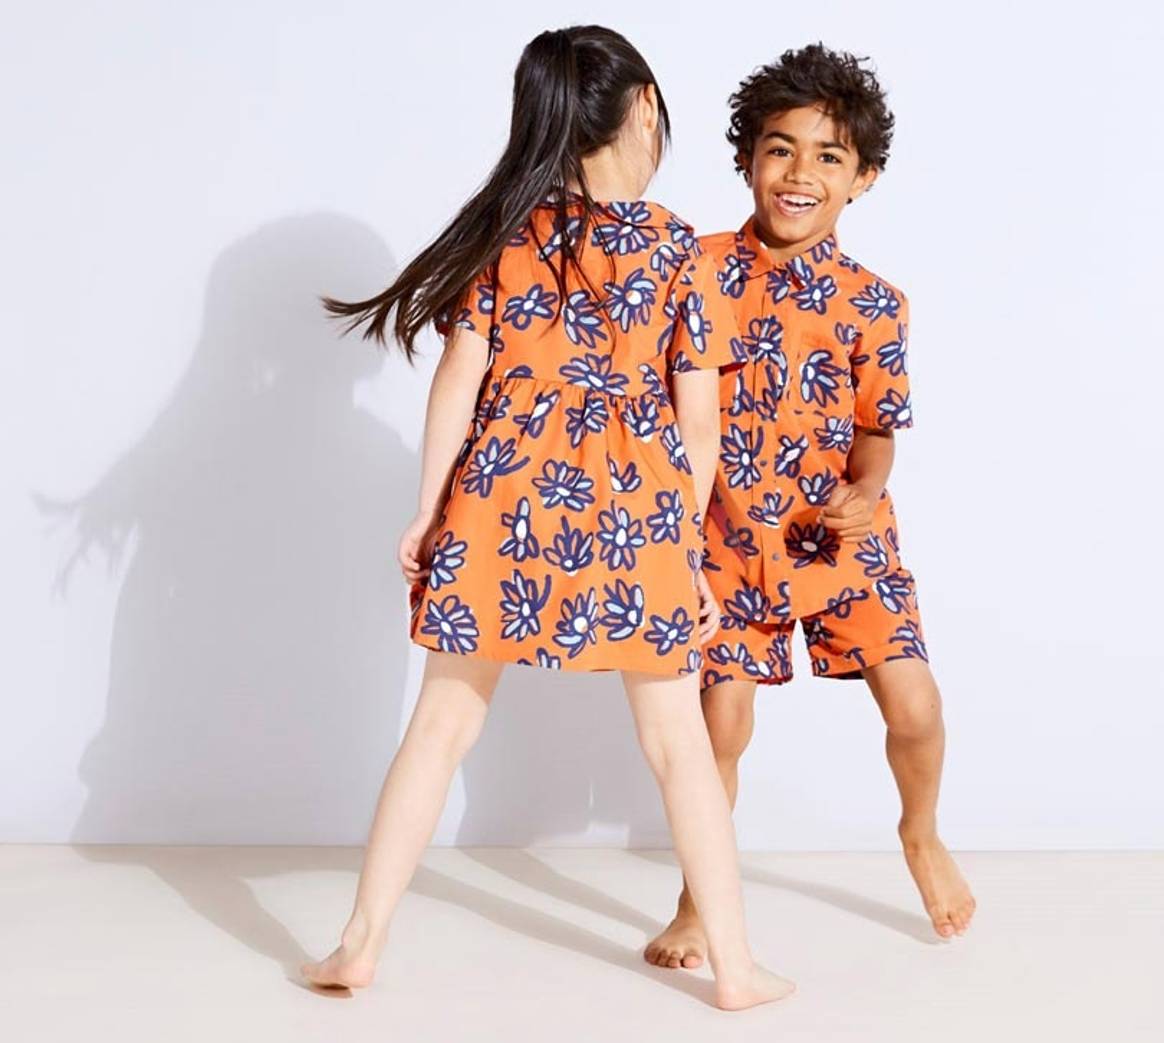 Kidswear platform Mini Mode goes big for its September edition